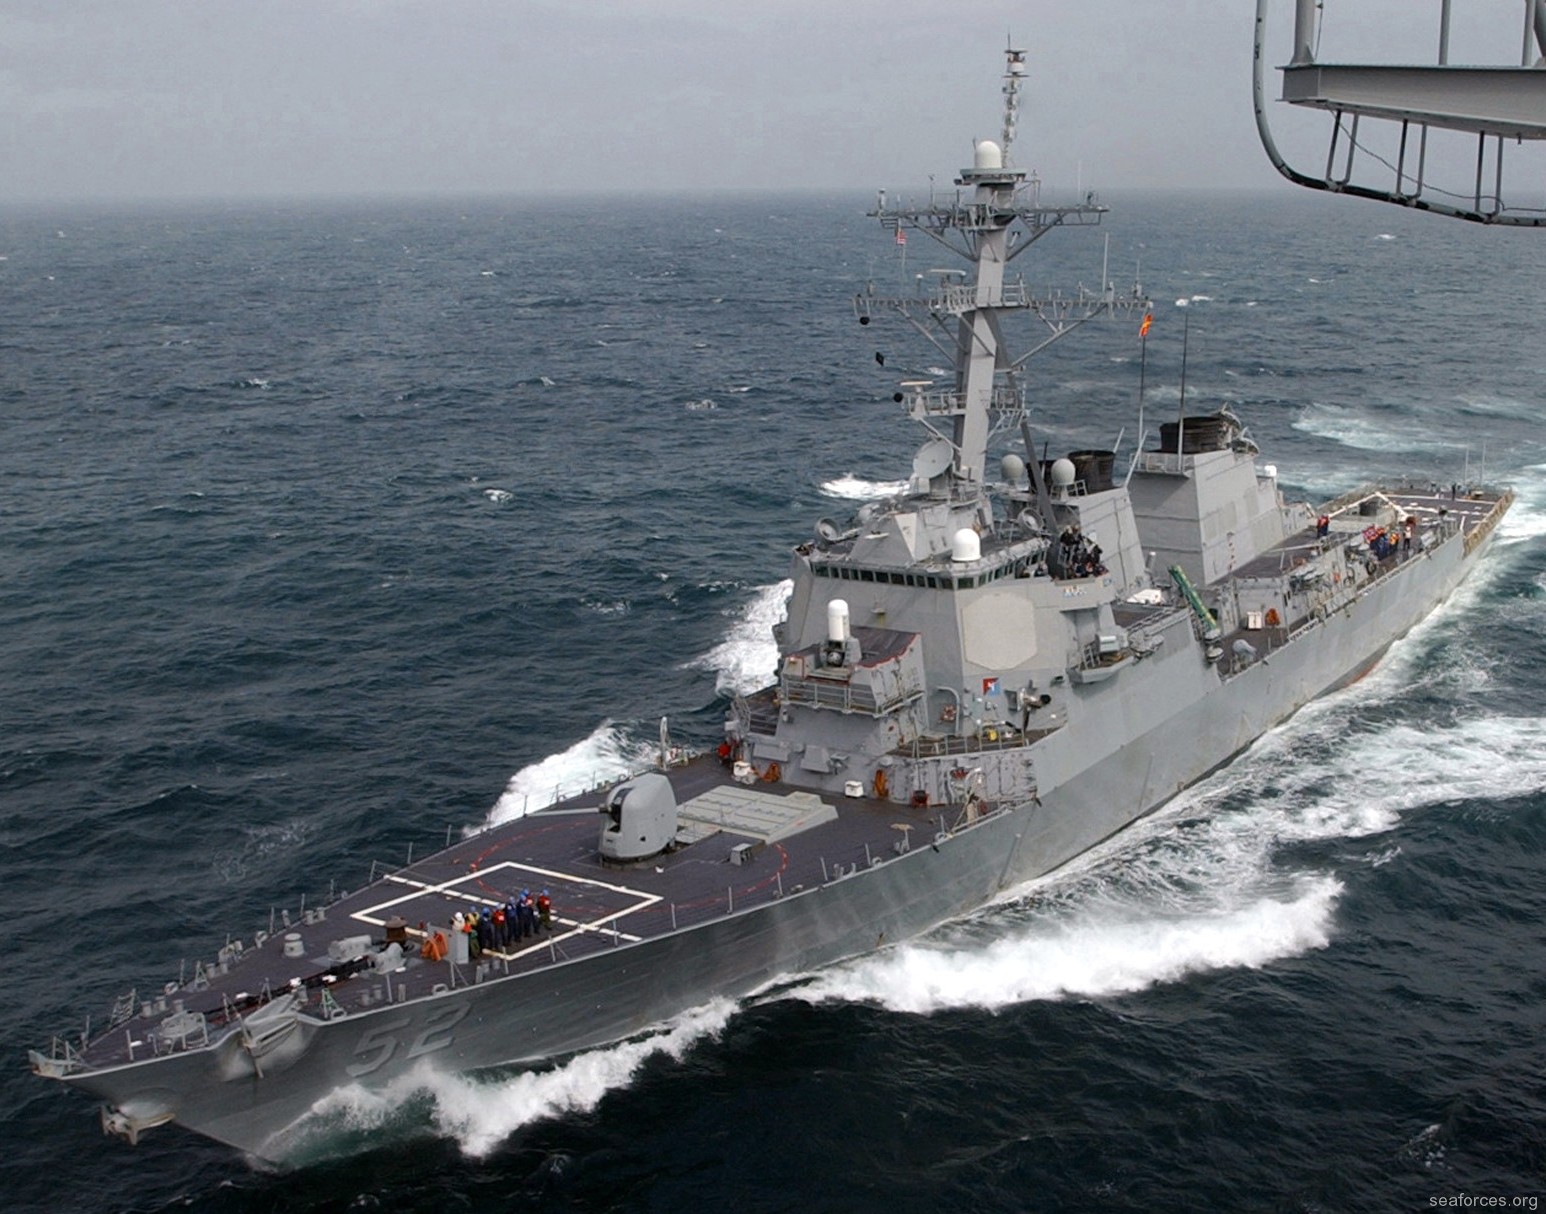 ddg-52 uss barry guided missile destroyer us navy 75